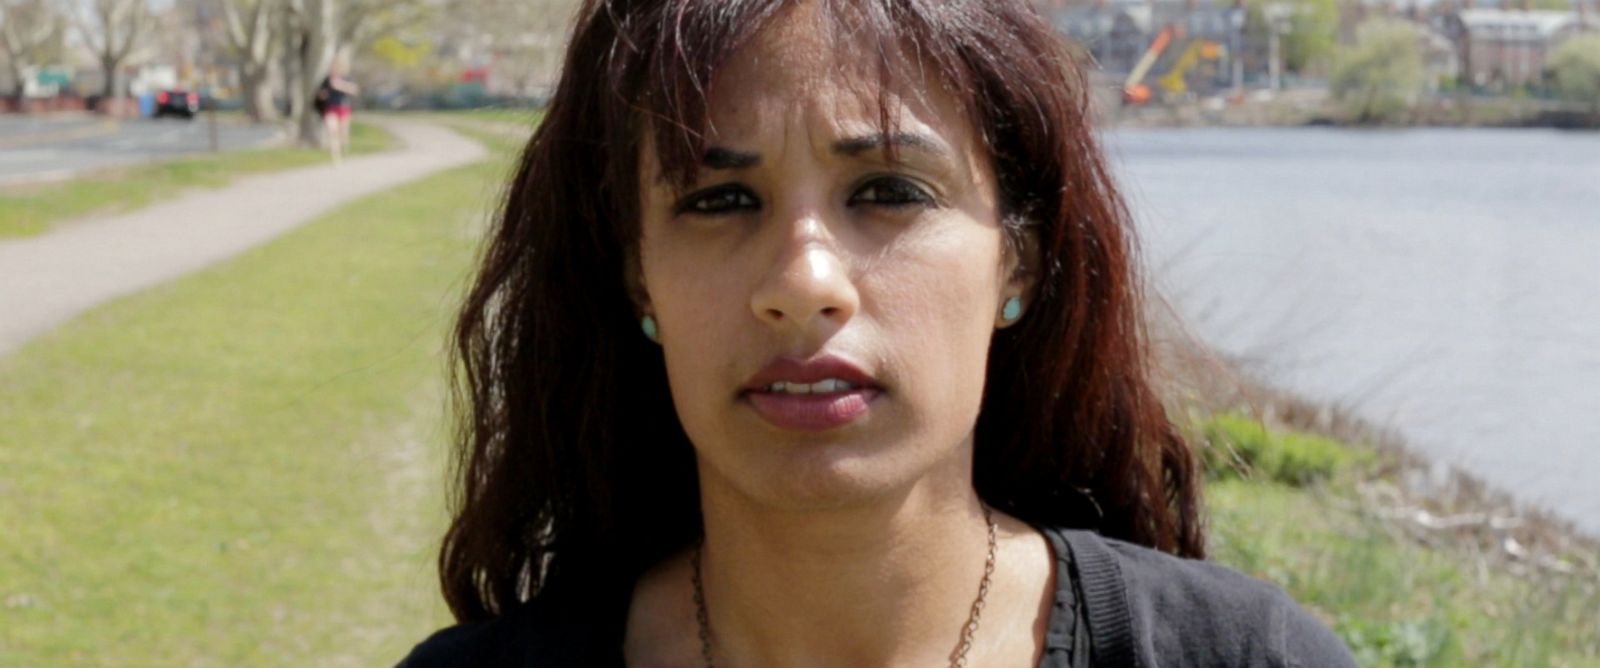 PHOTO: Mariya Taher, 33, underwent female genital cutting/mutilation when she was 7 years old.